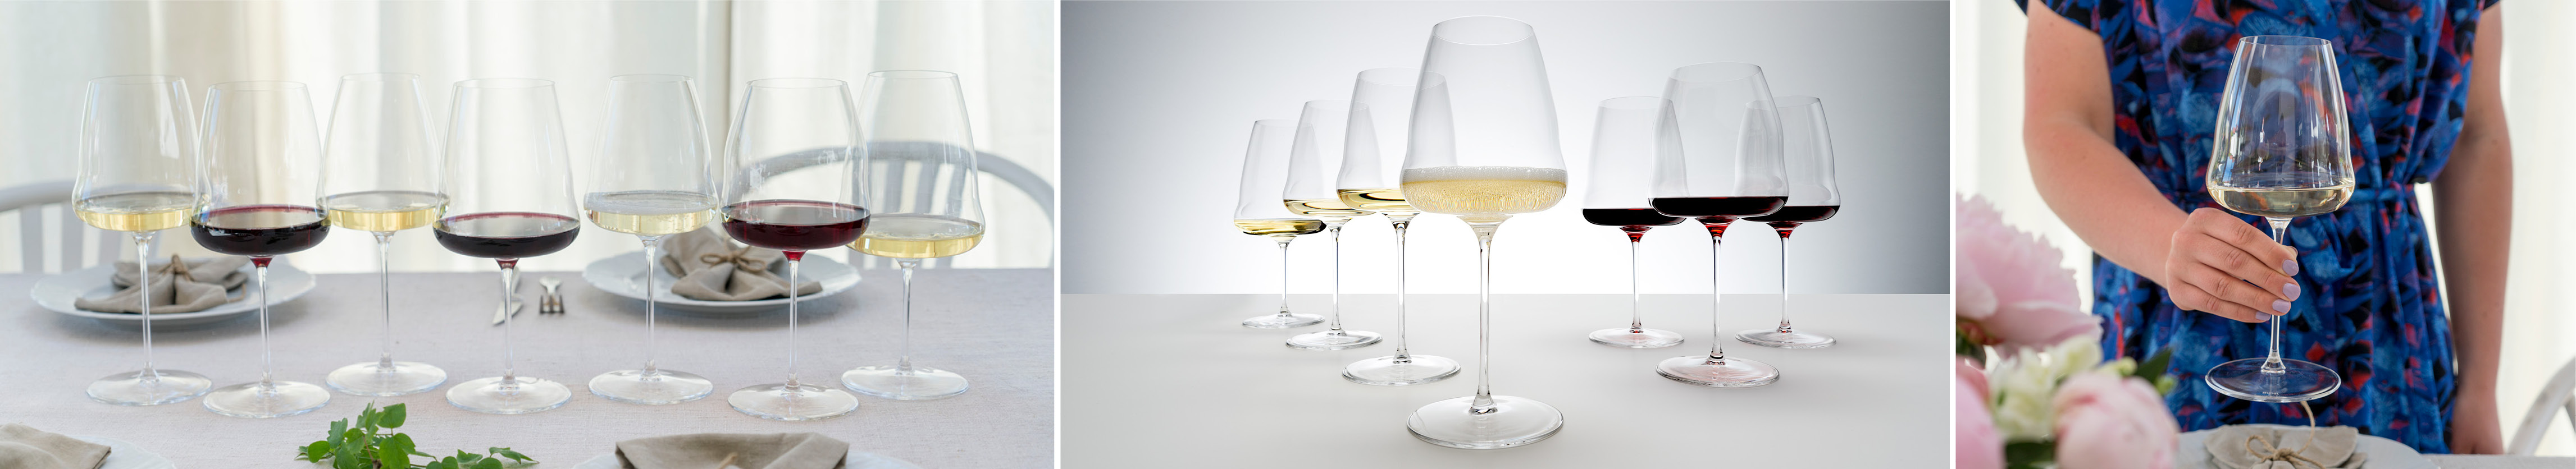 Riedel-Winewings-vinglass-wineglasses-d.jpg